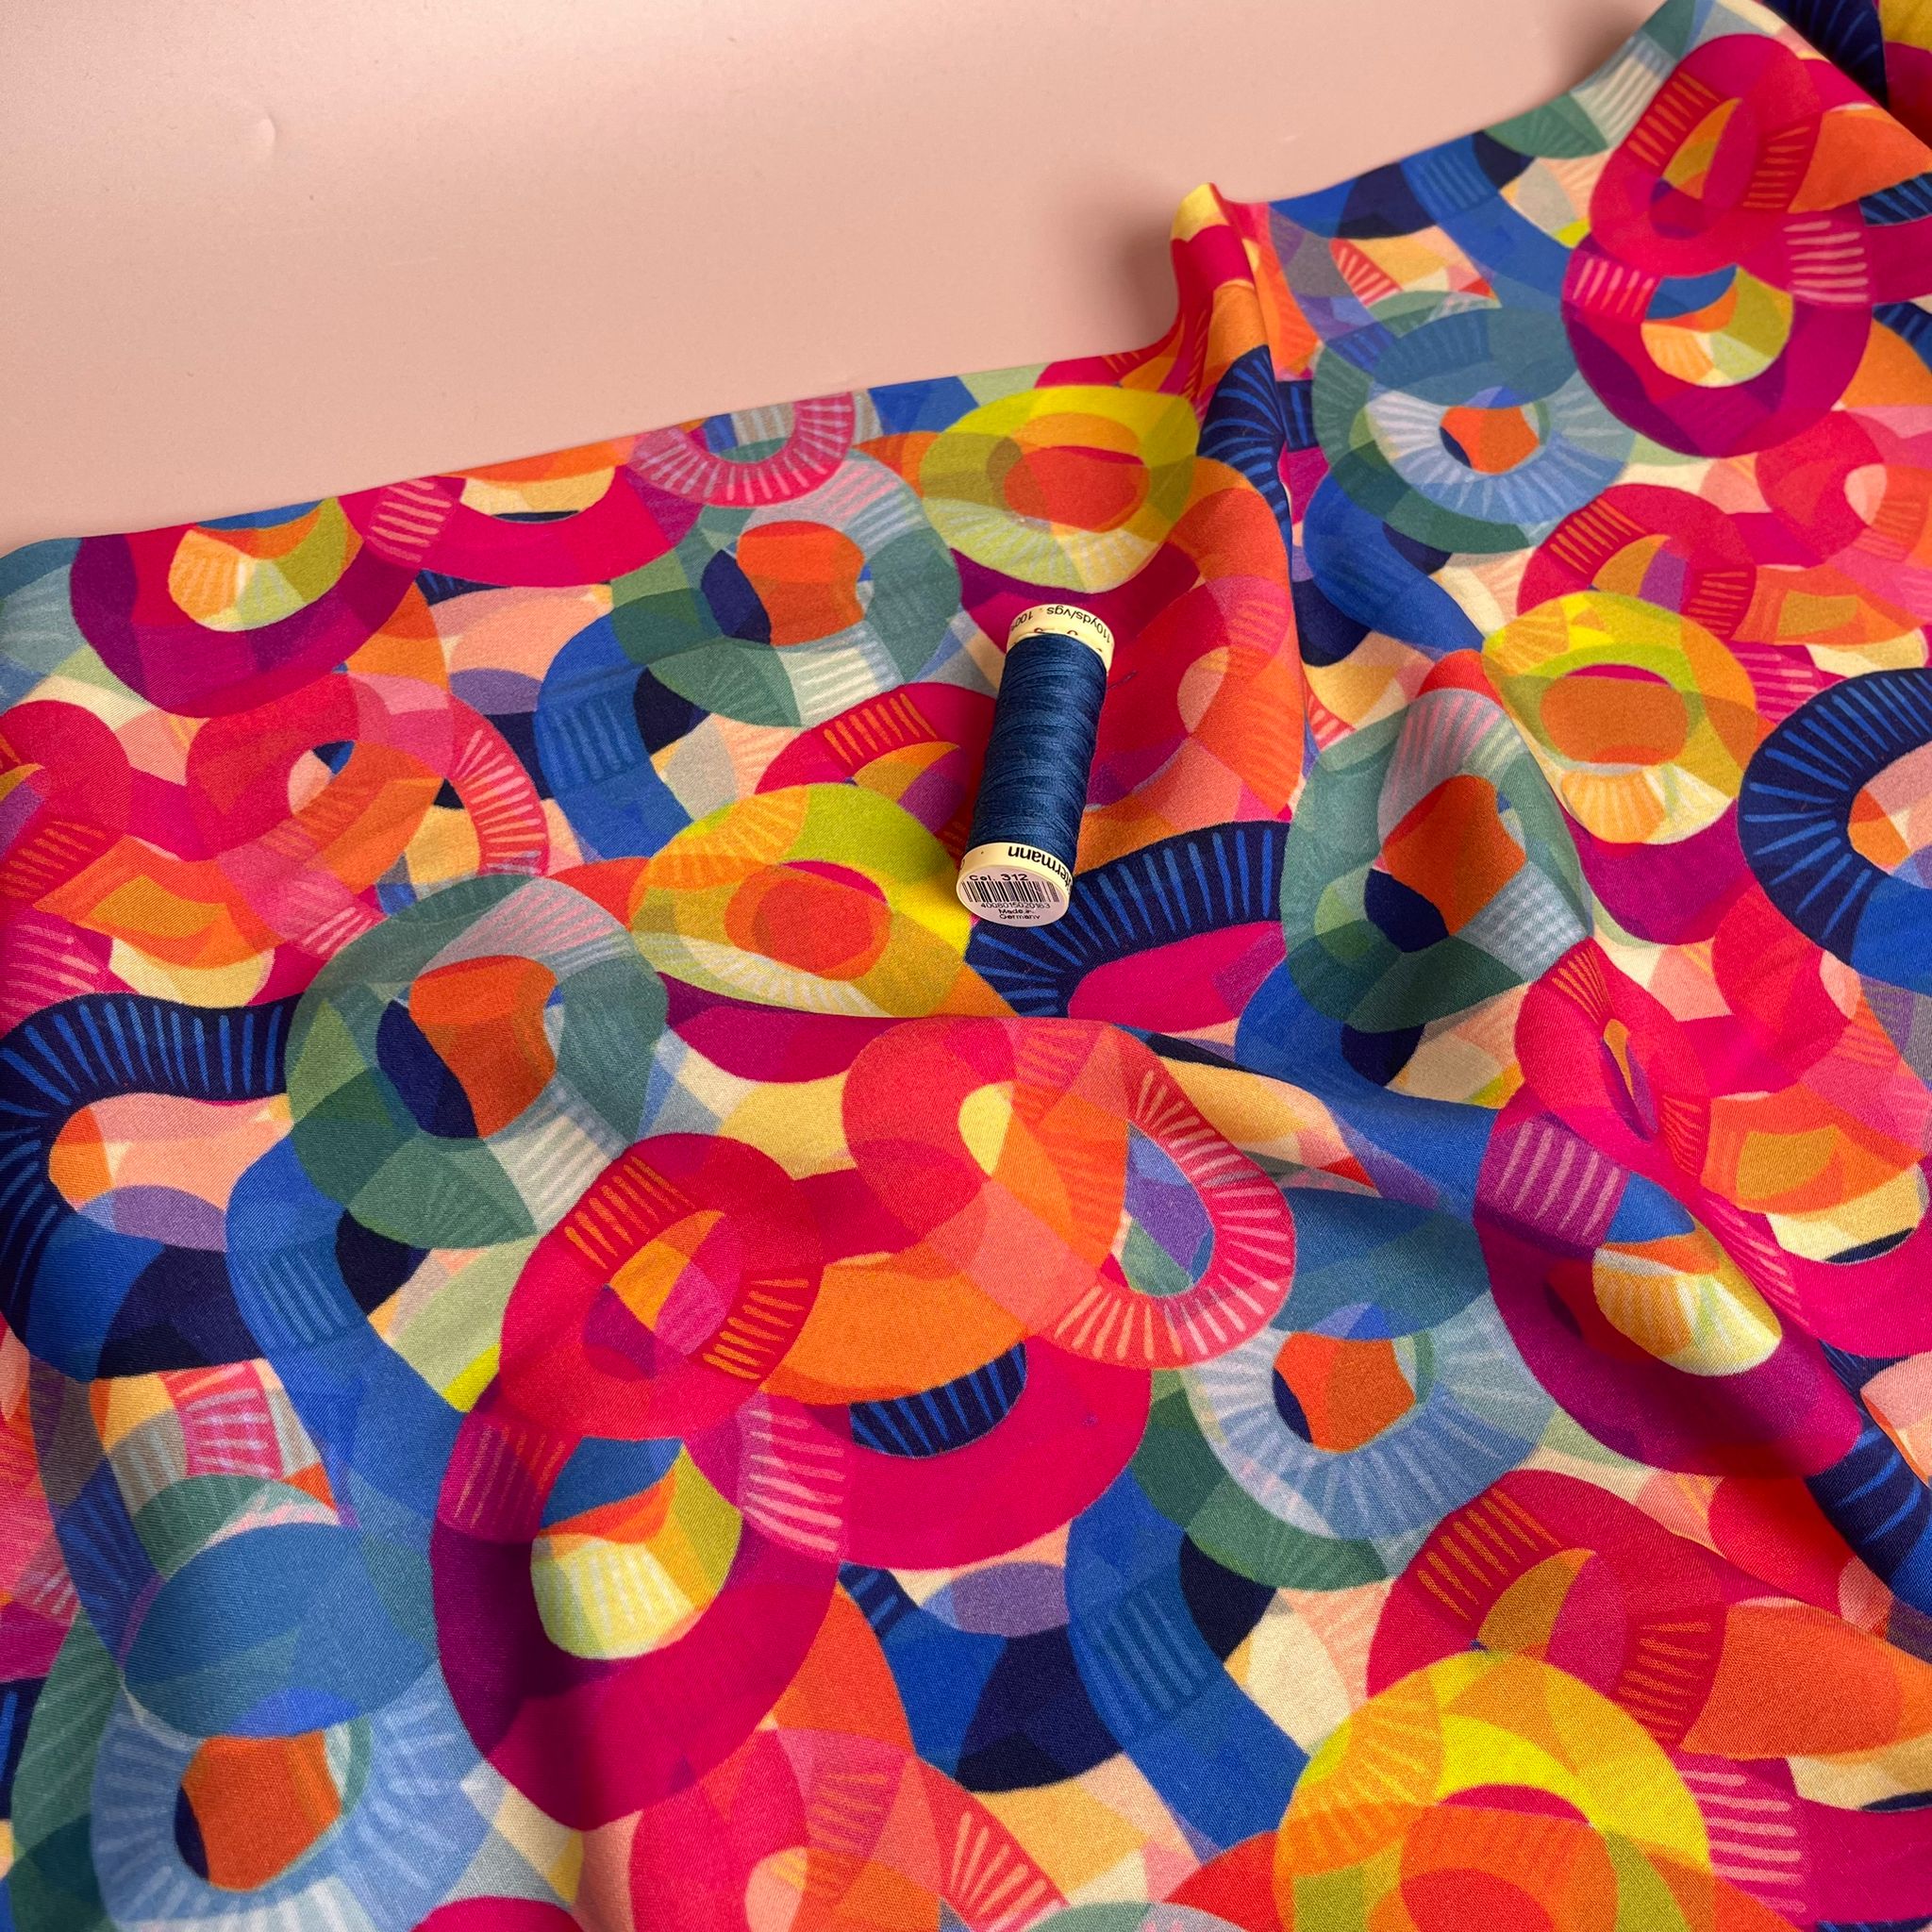 Rainbow Rings Viscose Fabric